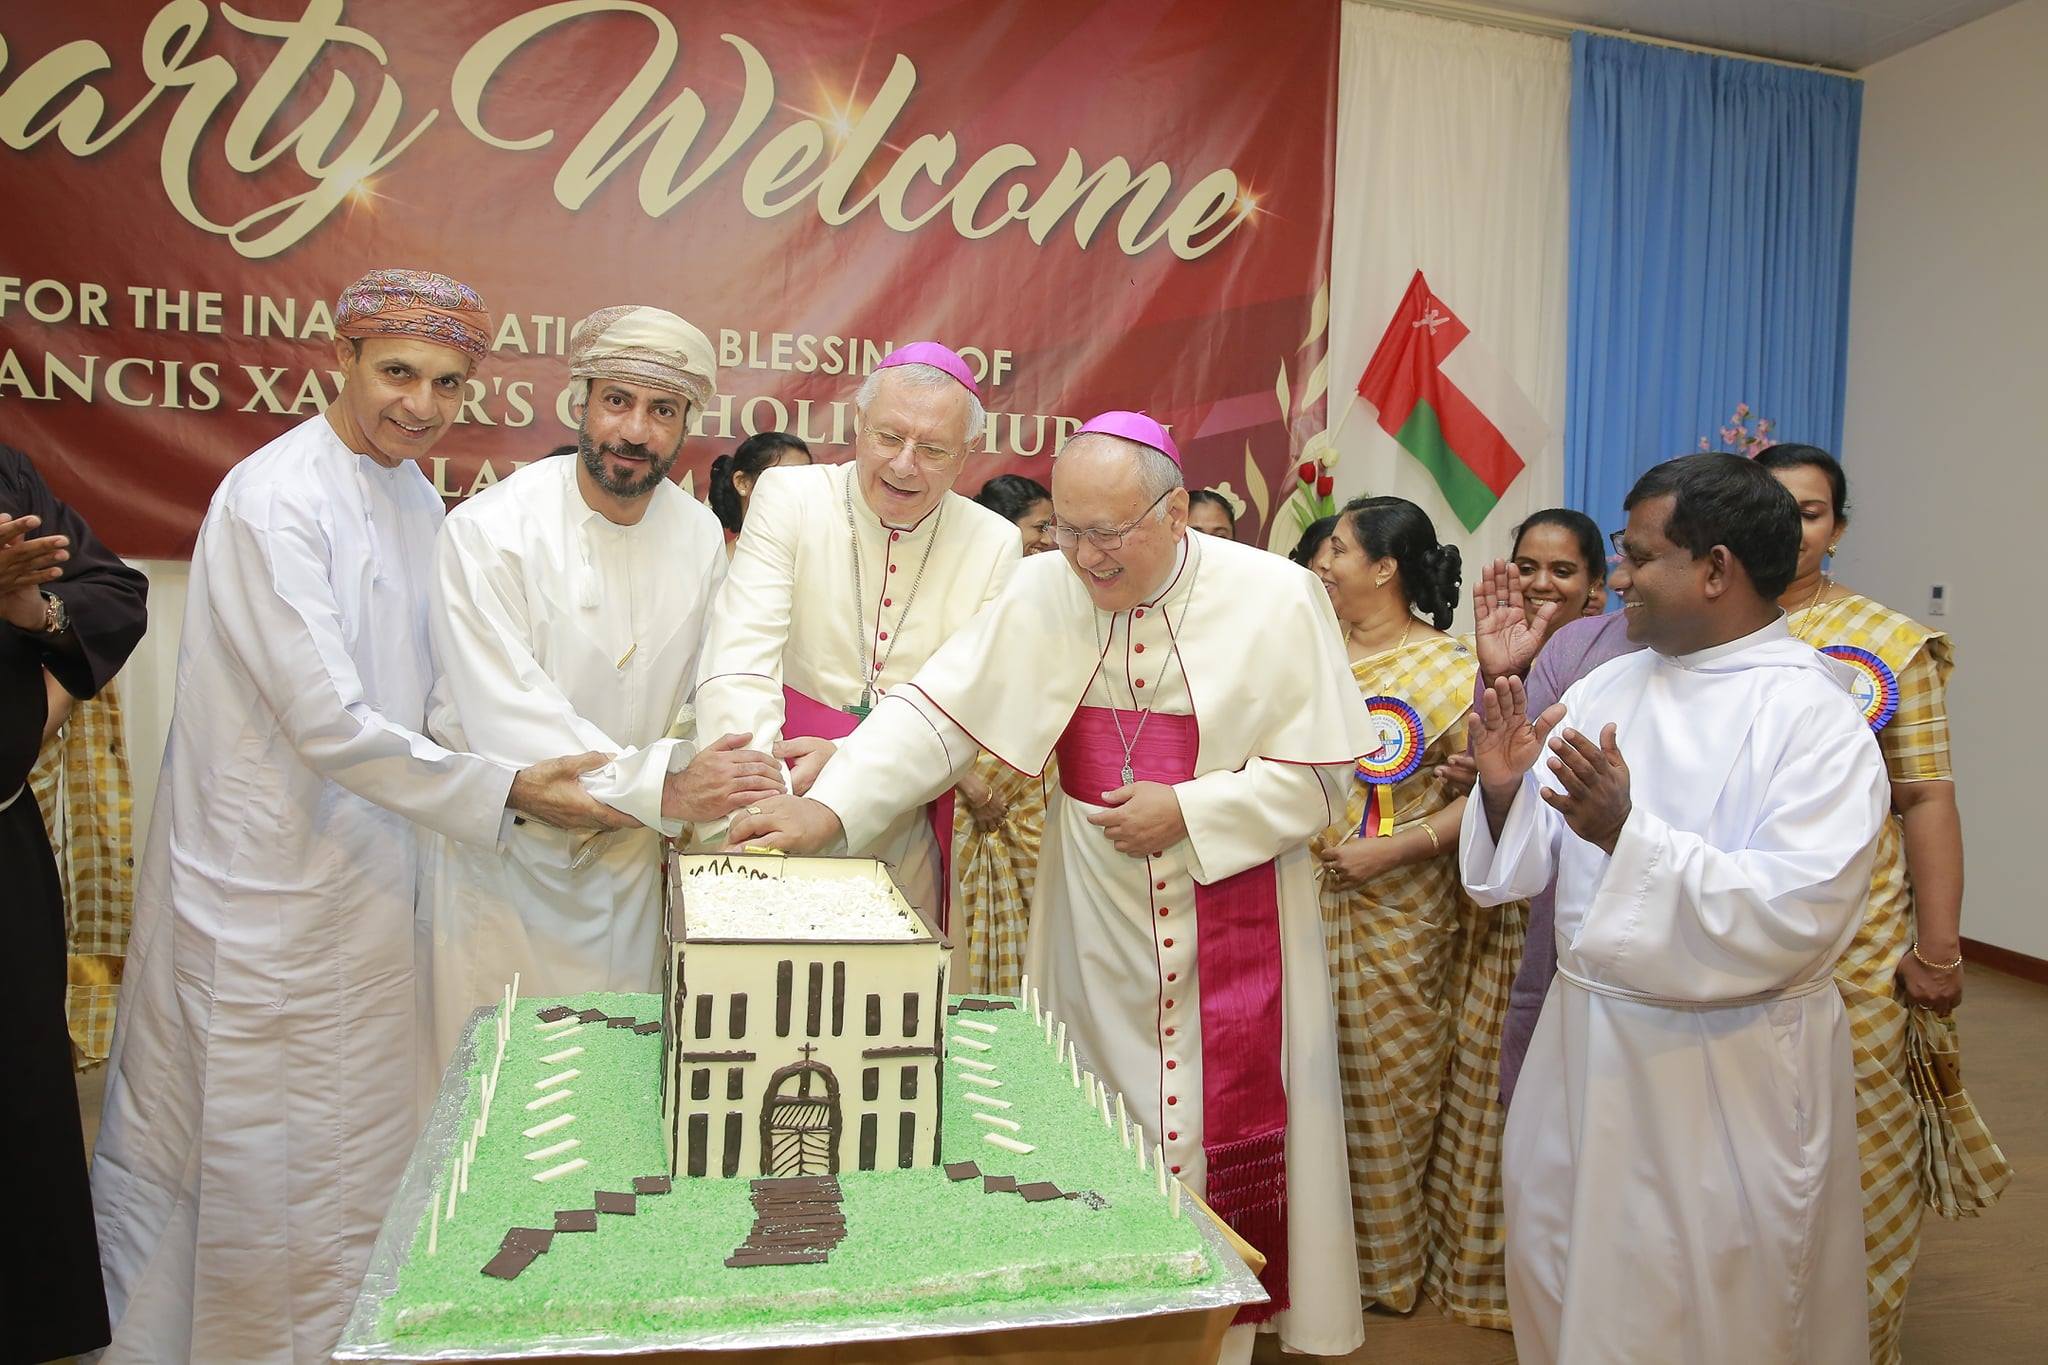 Opening of the new St. Francis Xavier’s Catholic Church at Salalah